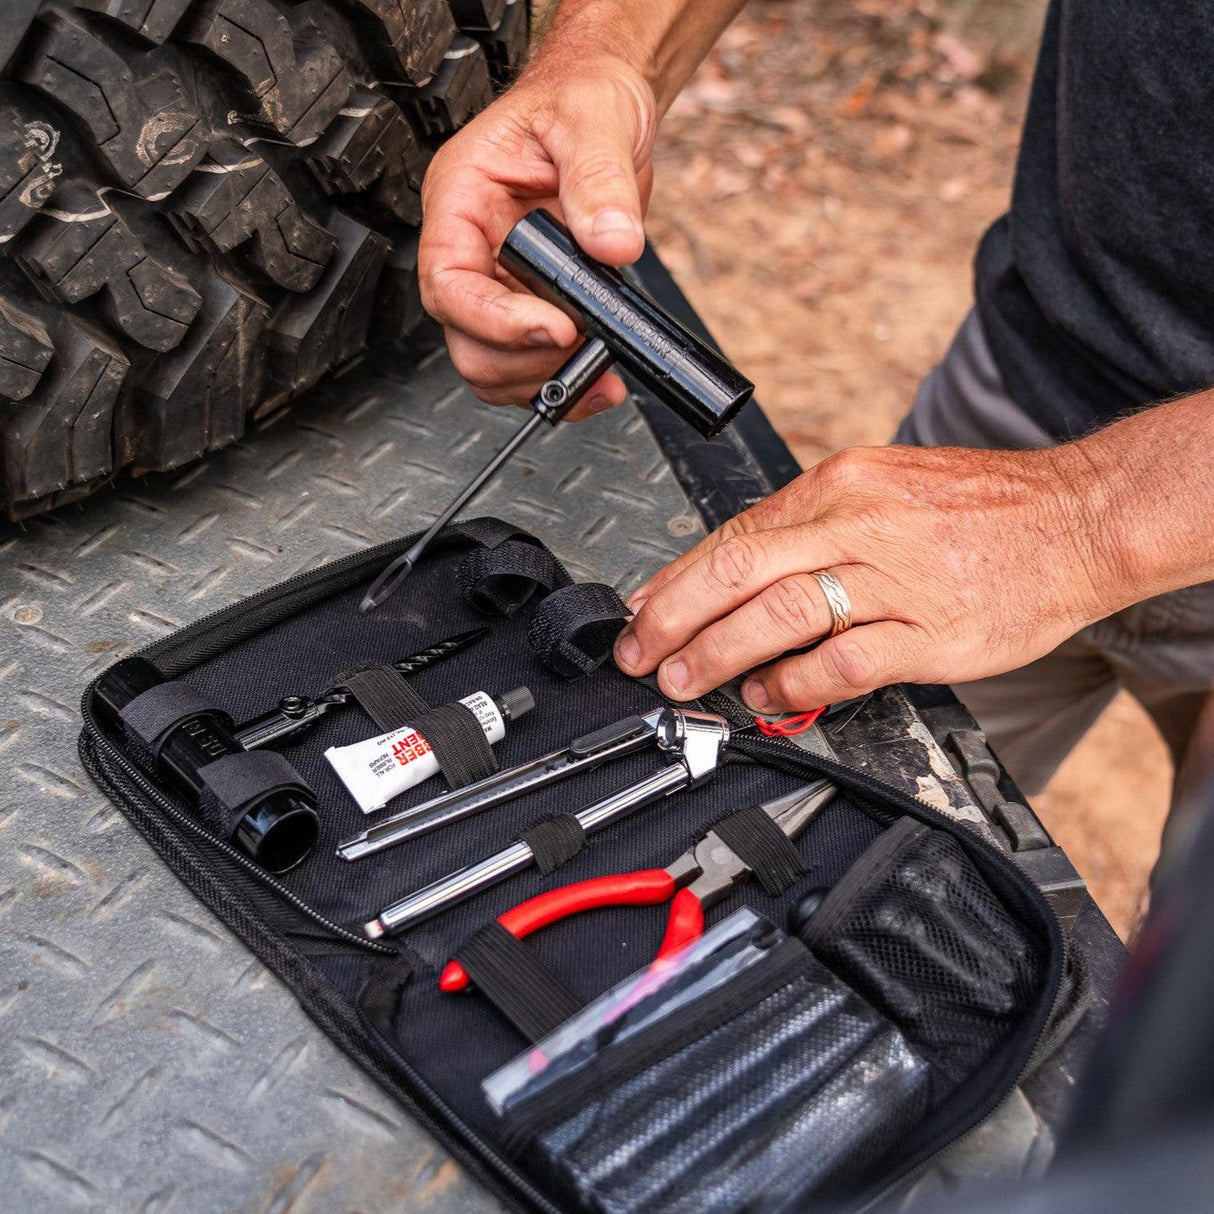 CAOS Tyre Repair Kit 54pc (Soft Case)